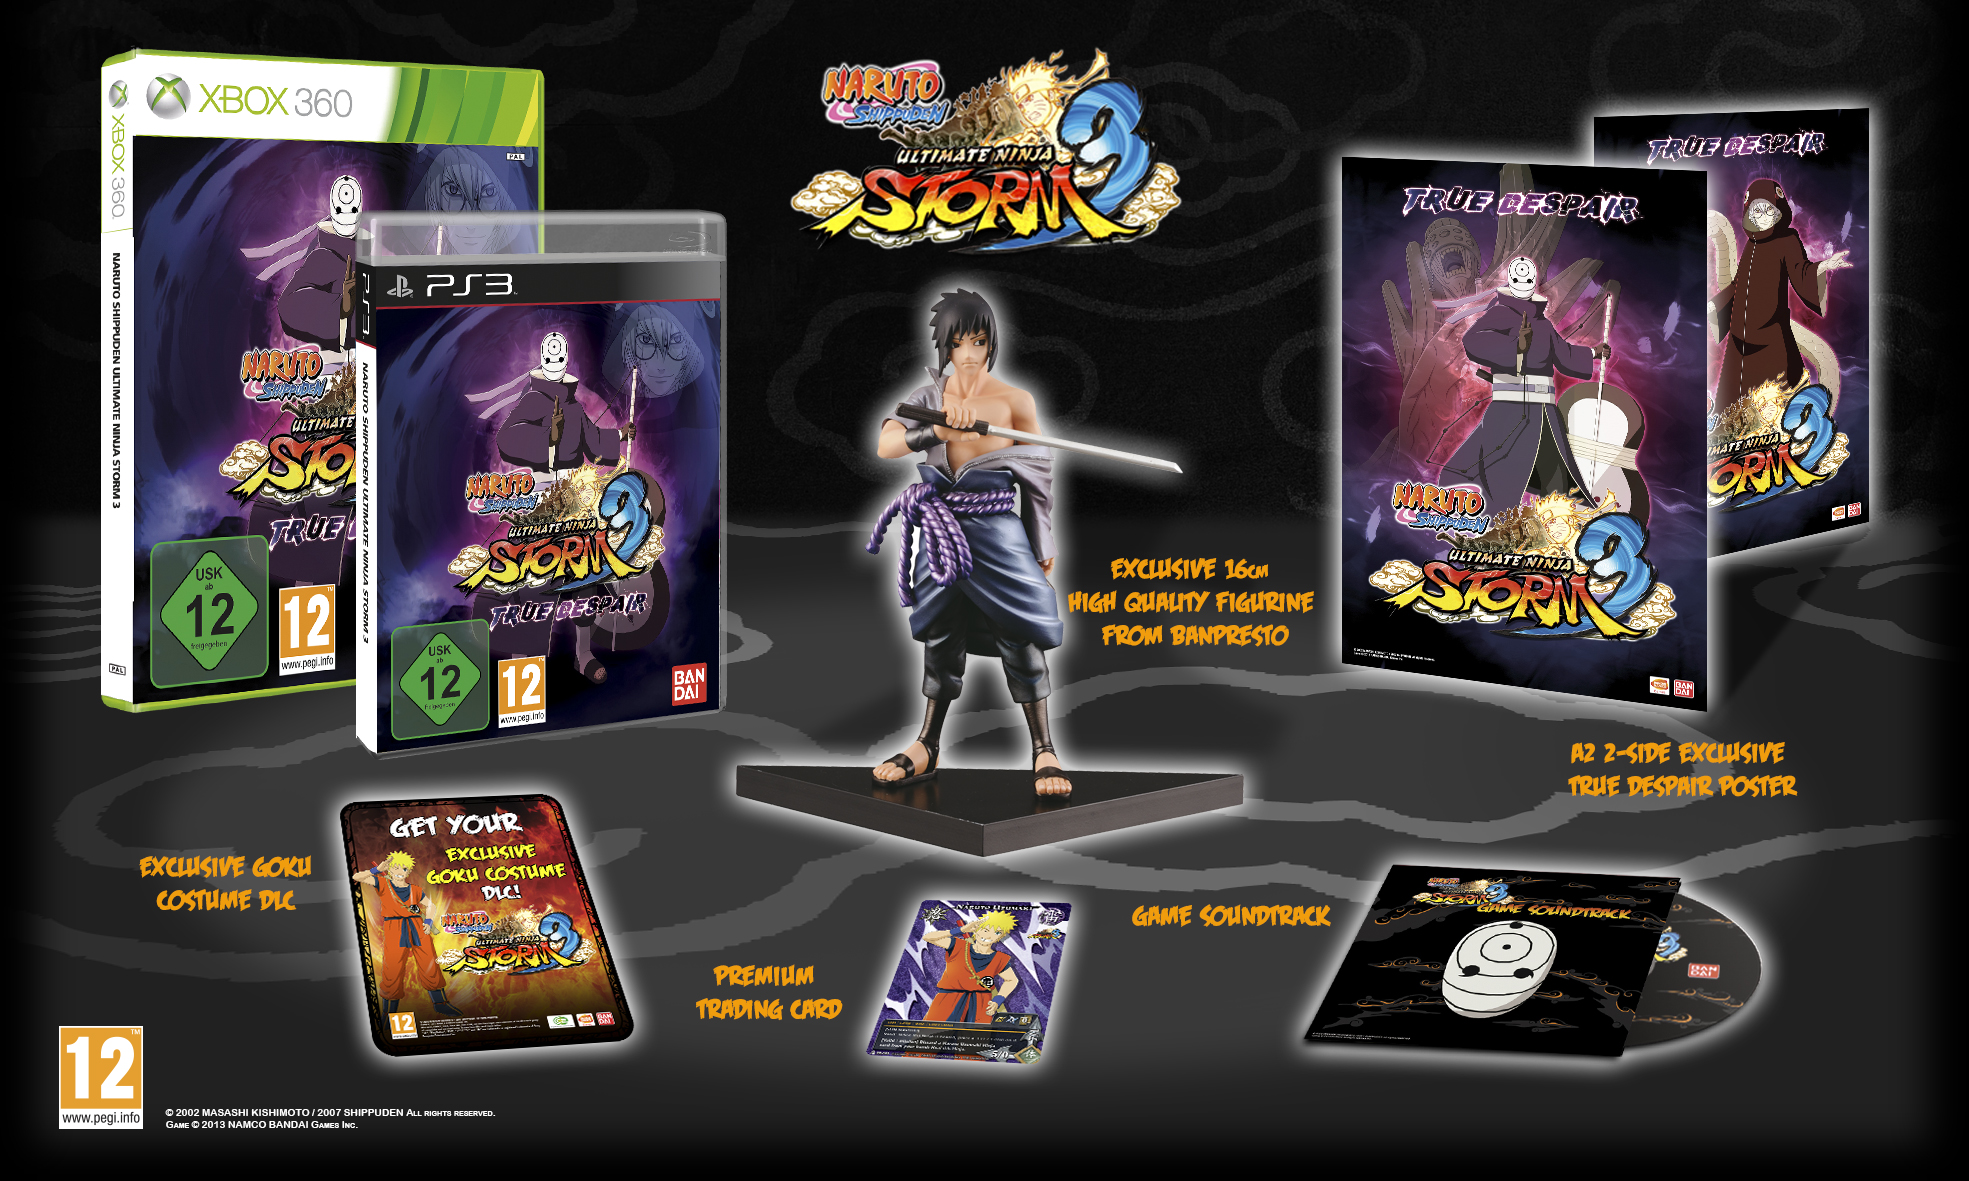 naruto ultimate ninja storm 3 limited edition price